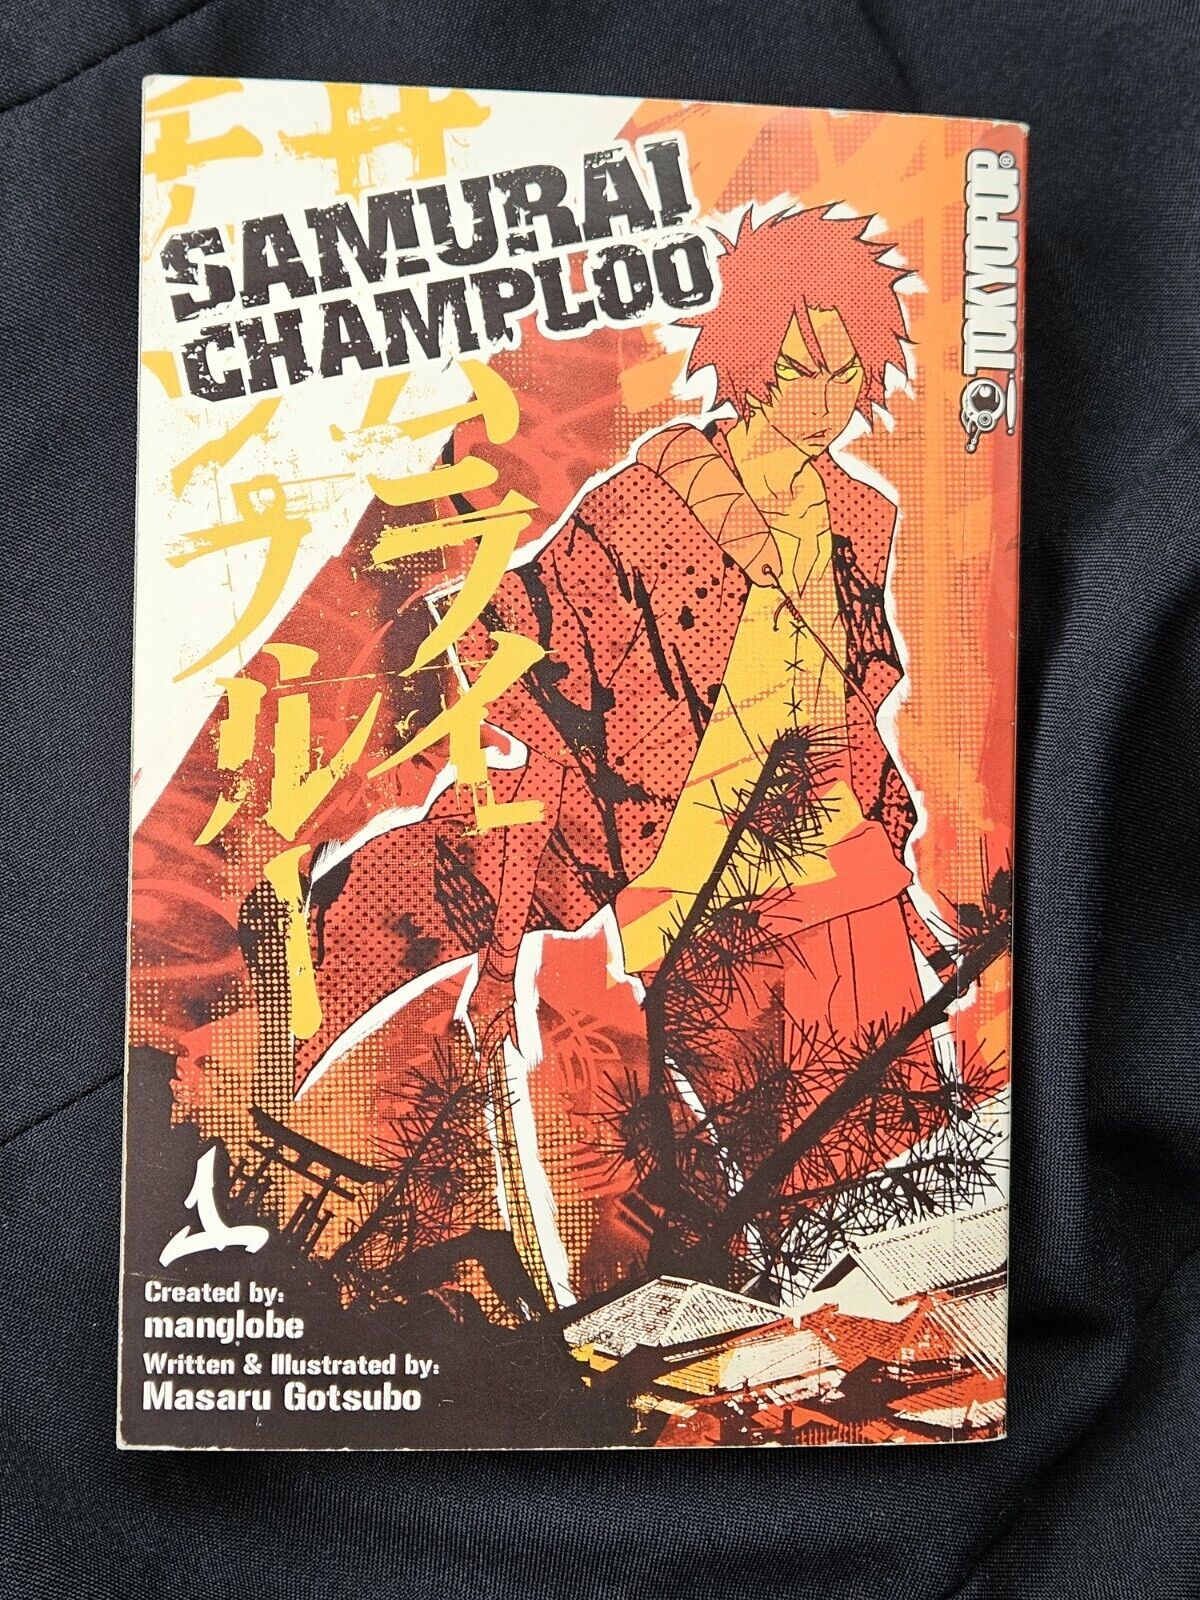 Samurai Champloo Vol. 1 Manga English Tokyopop Book Anime Used